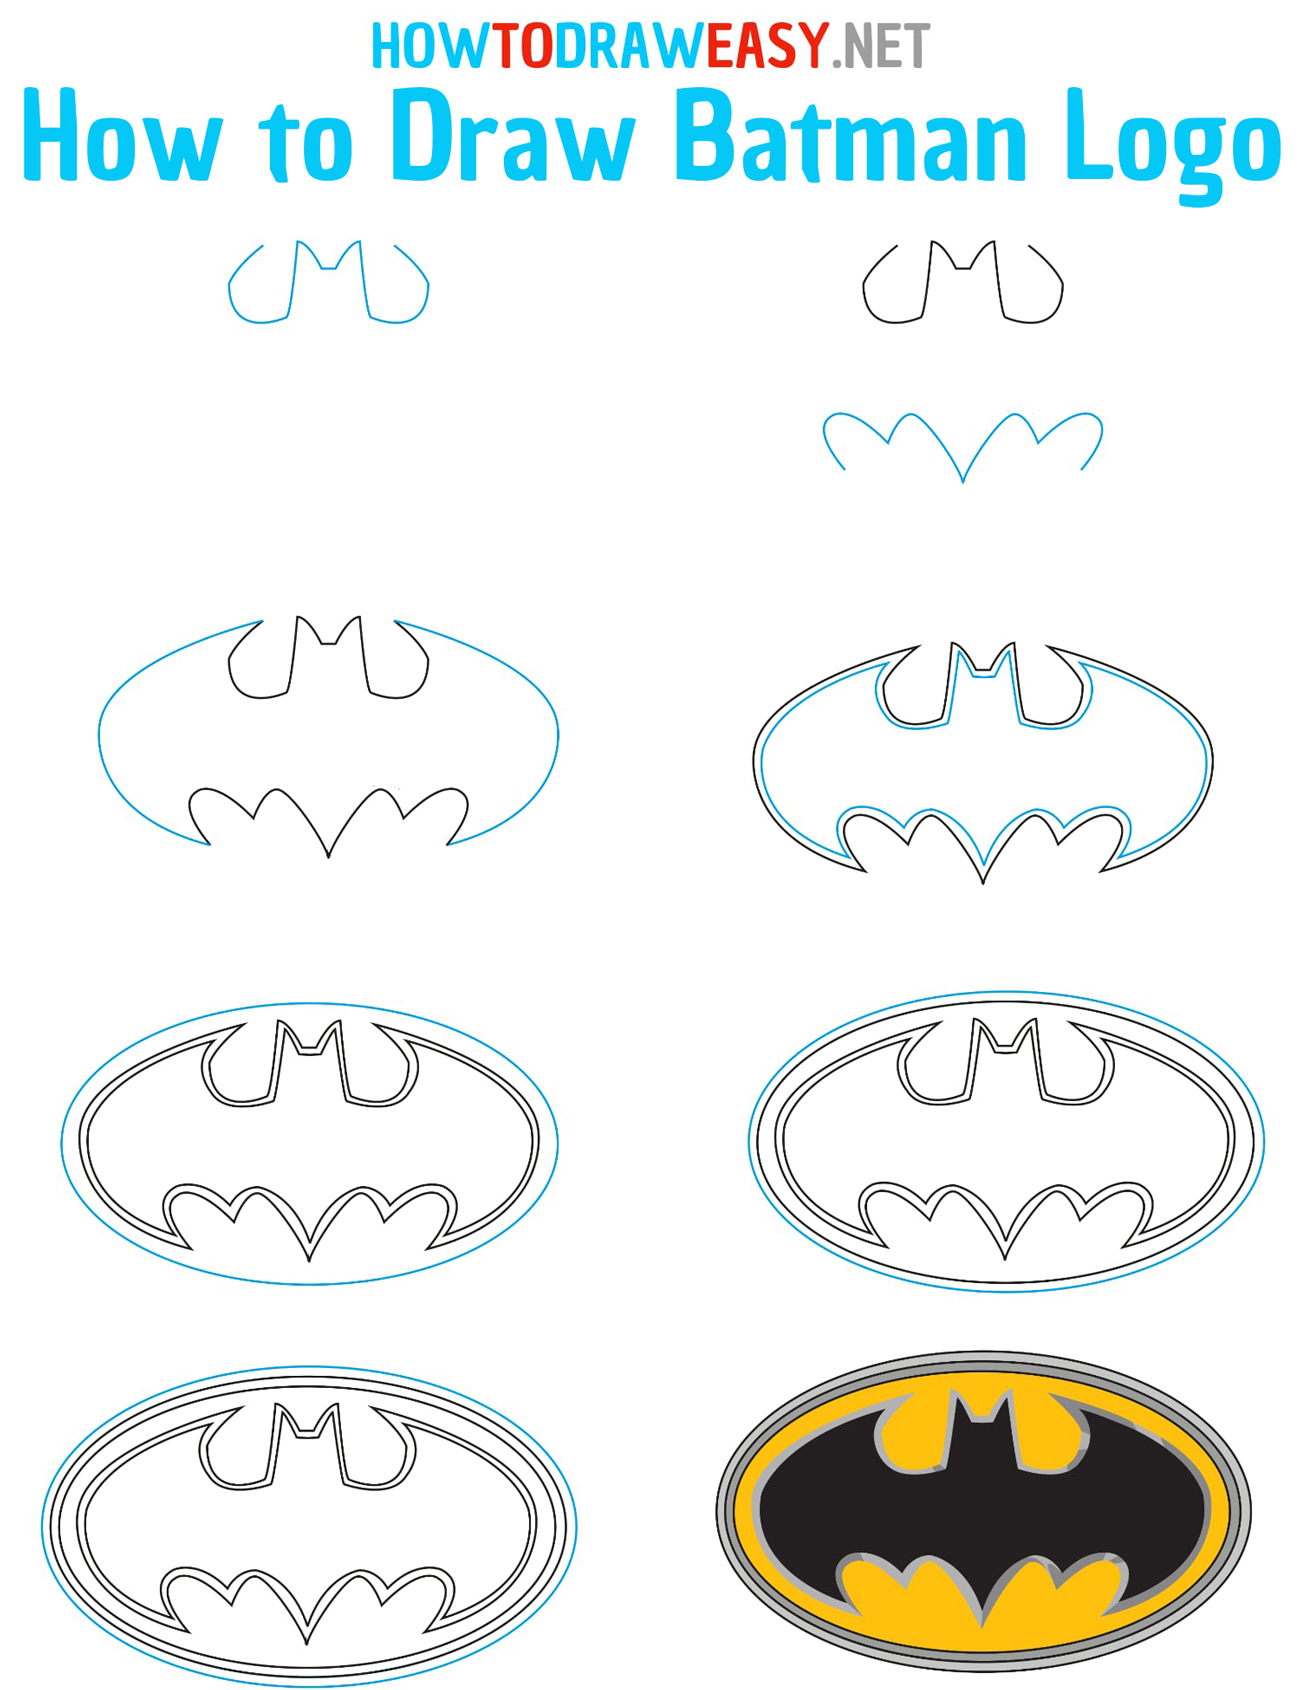 How to Draw Batman Symbol Step by Step